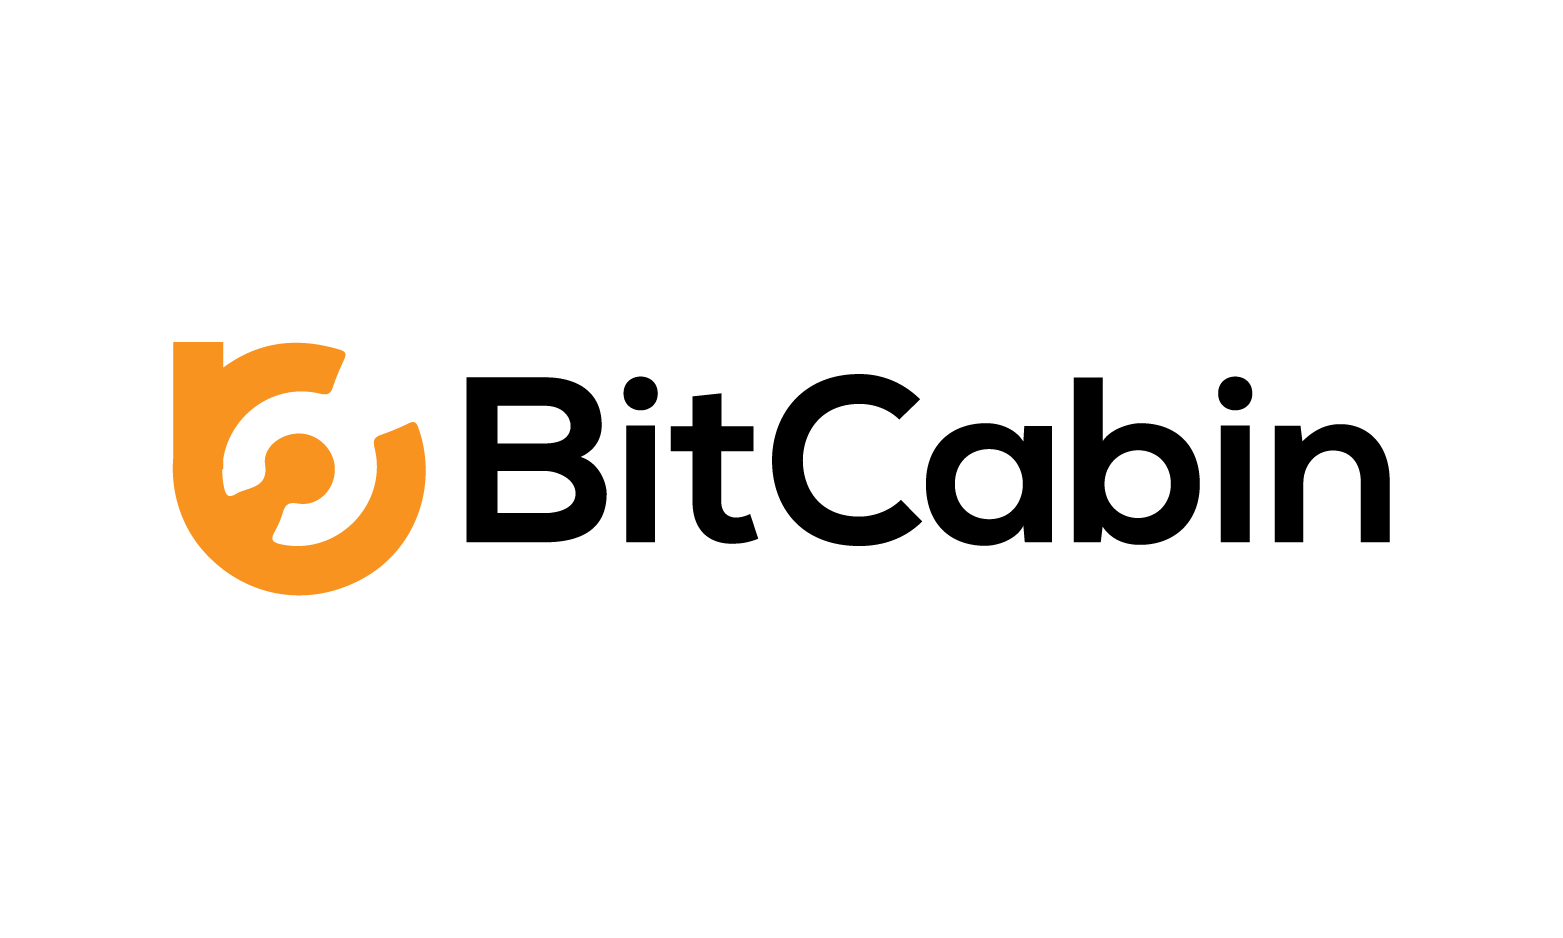 BitCabin.com - Creative brandable domain for sale